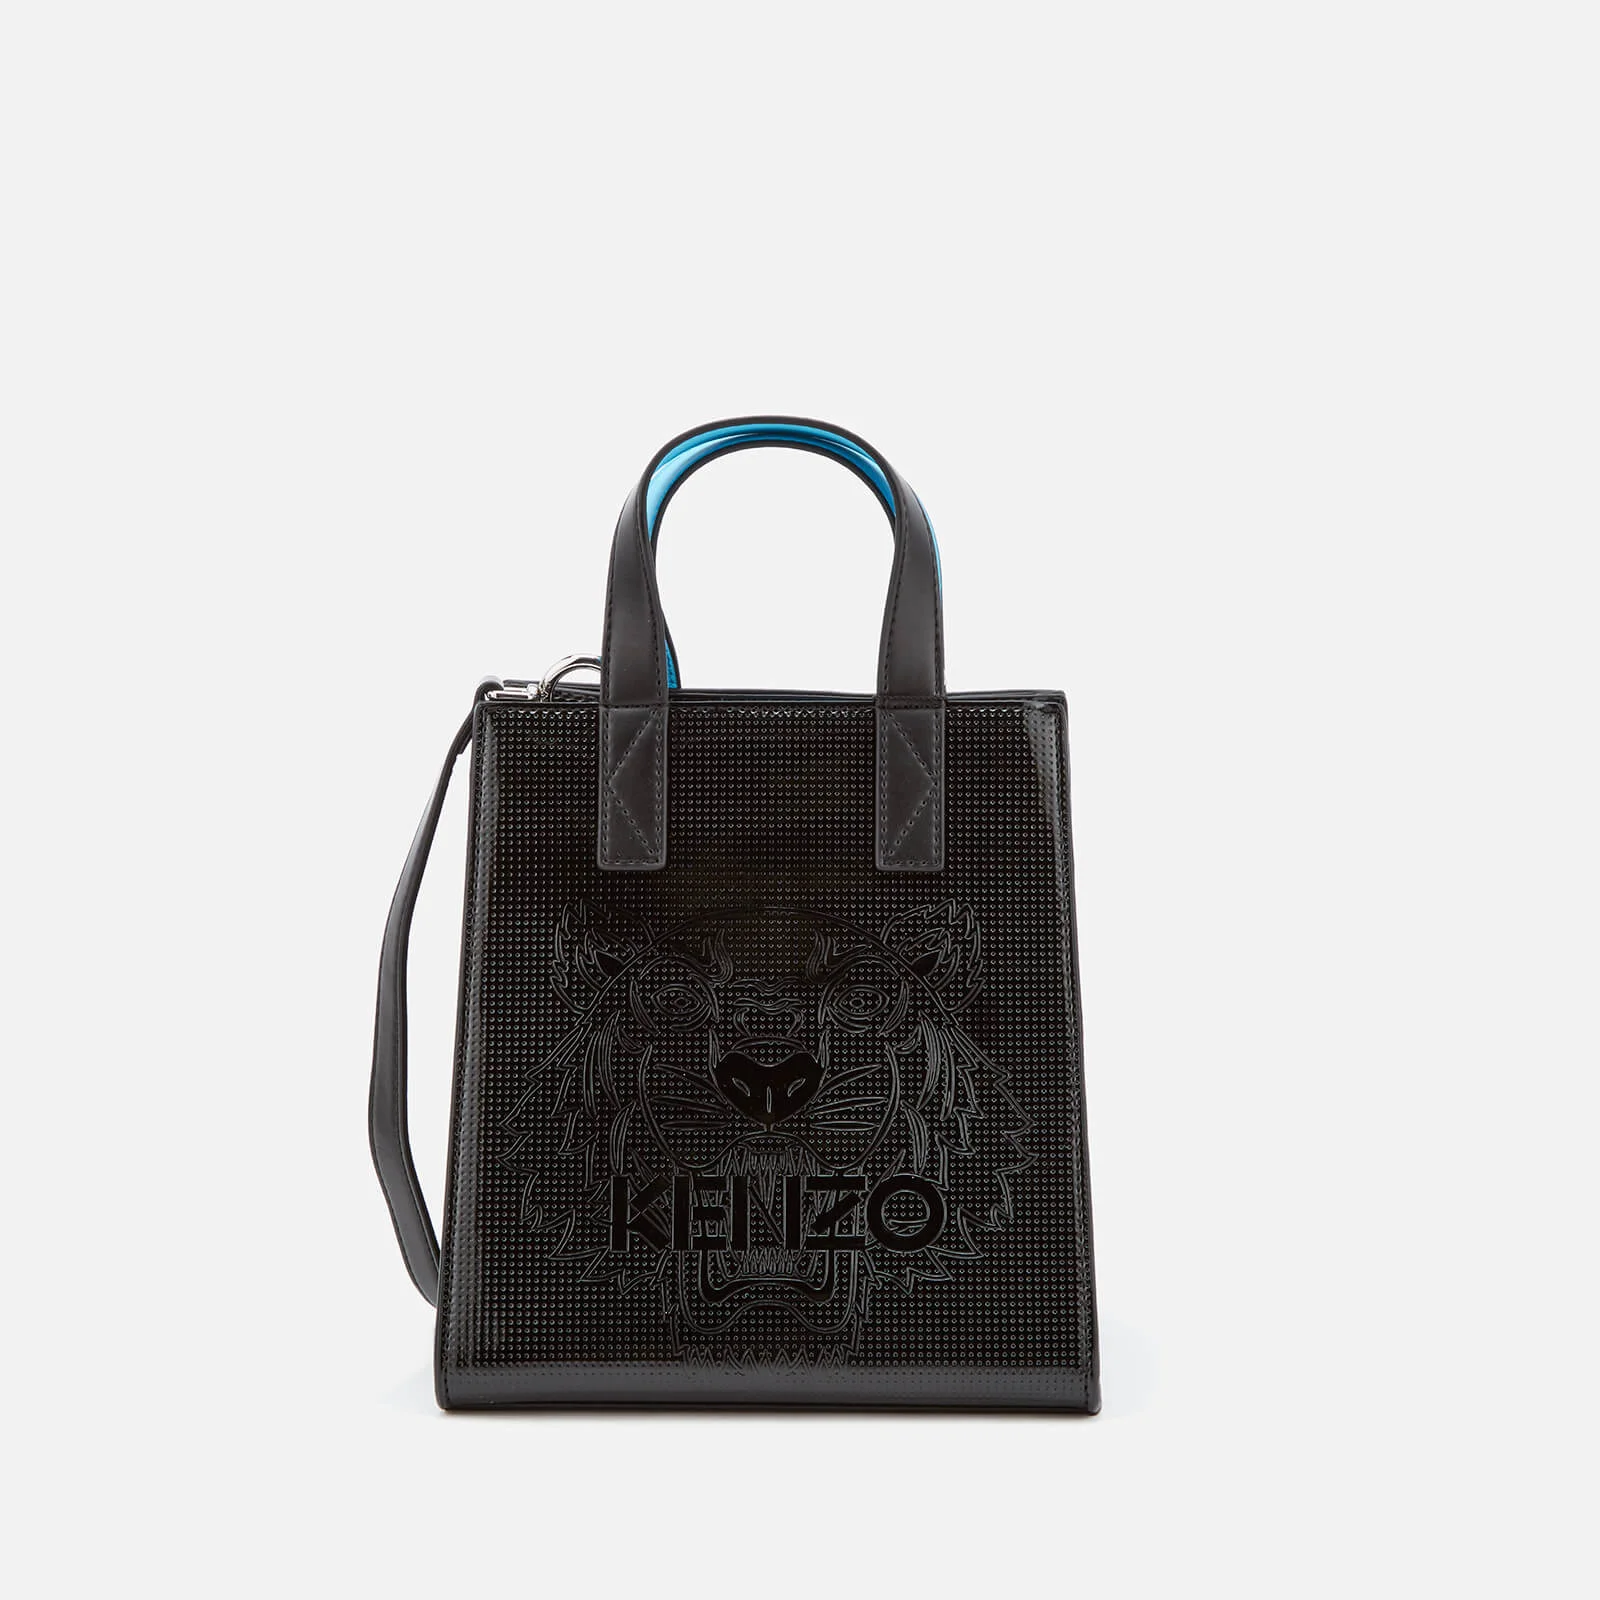 KENZO Women's Icons Horizontal Mini Tote Bag - Black Image 1